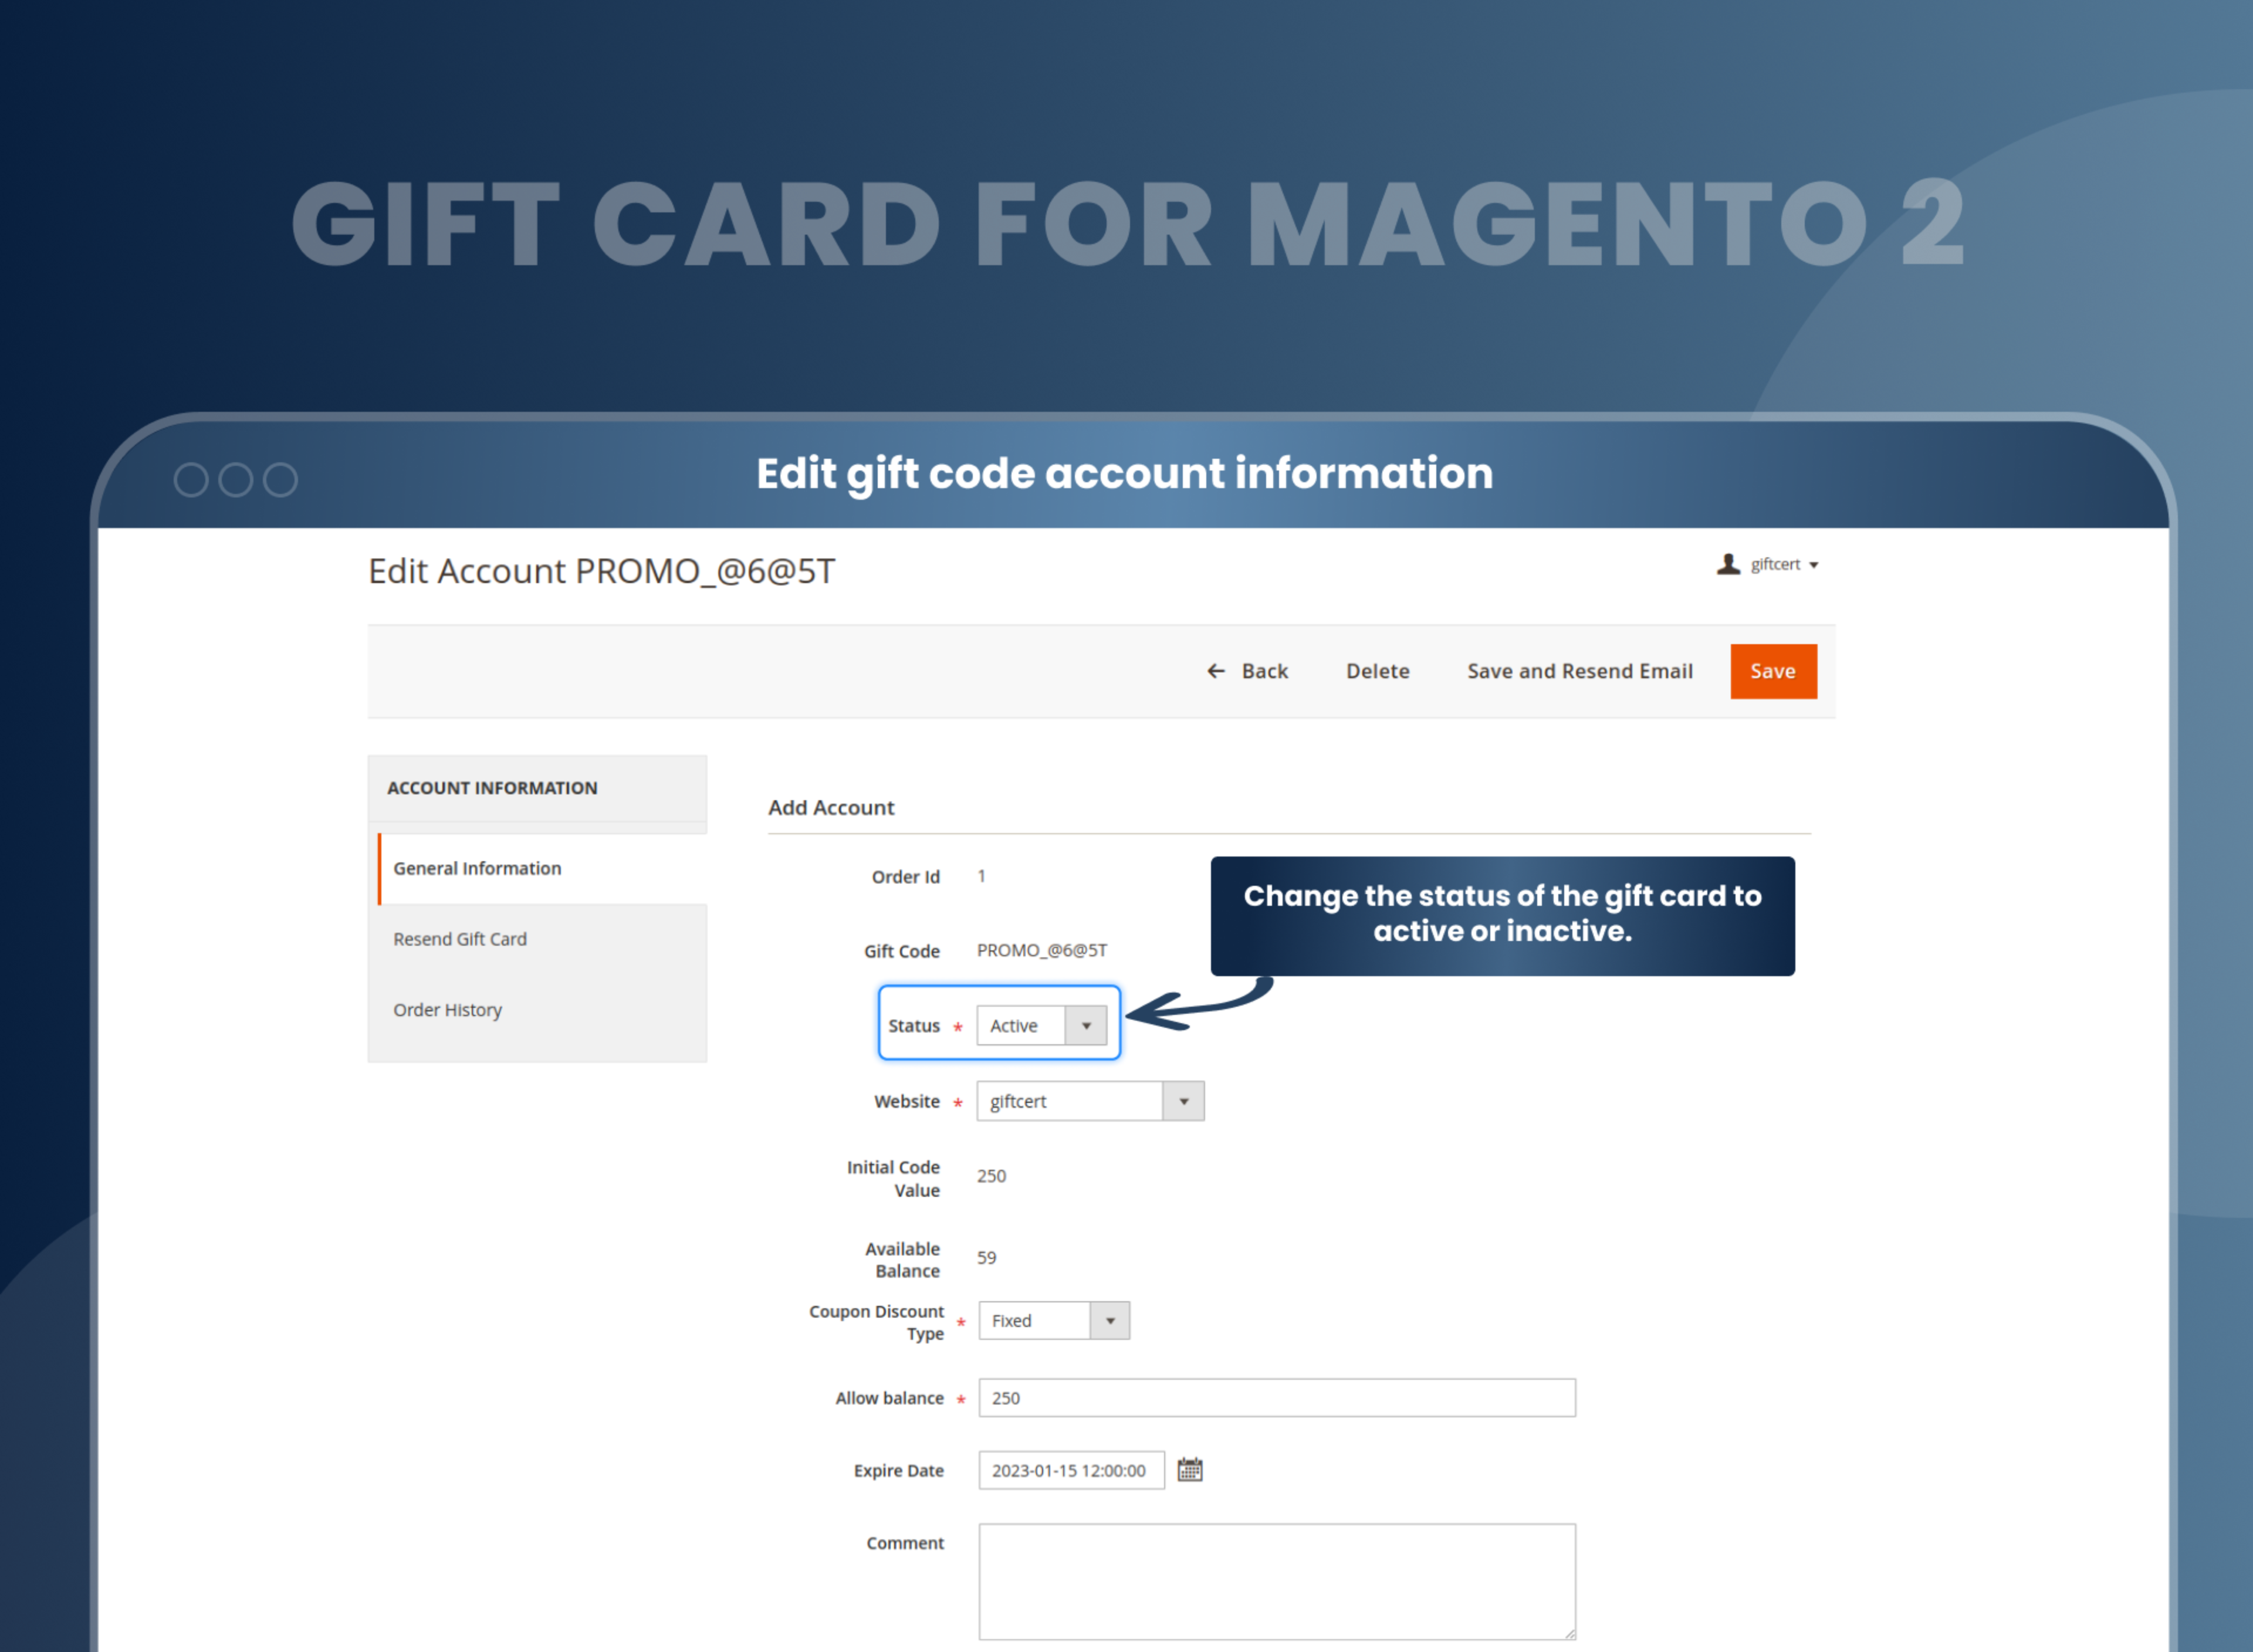 Edit gift code account information